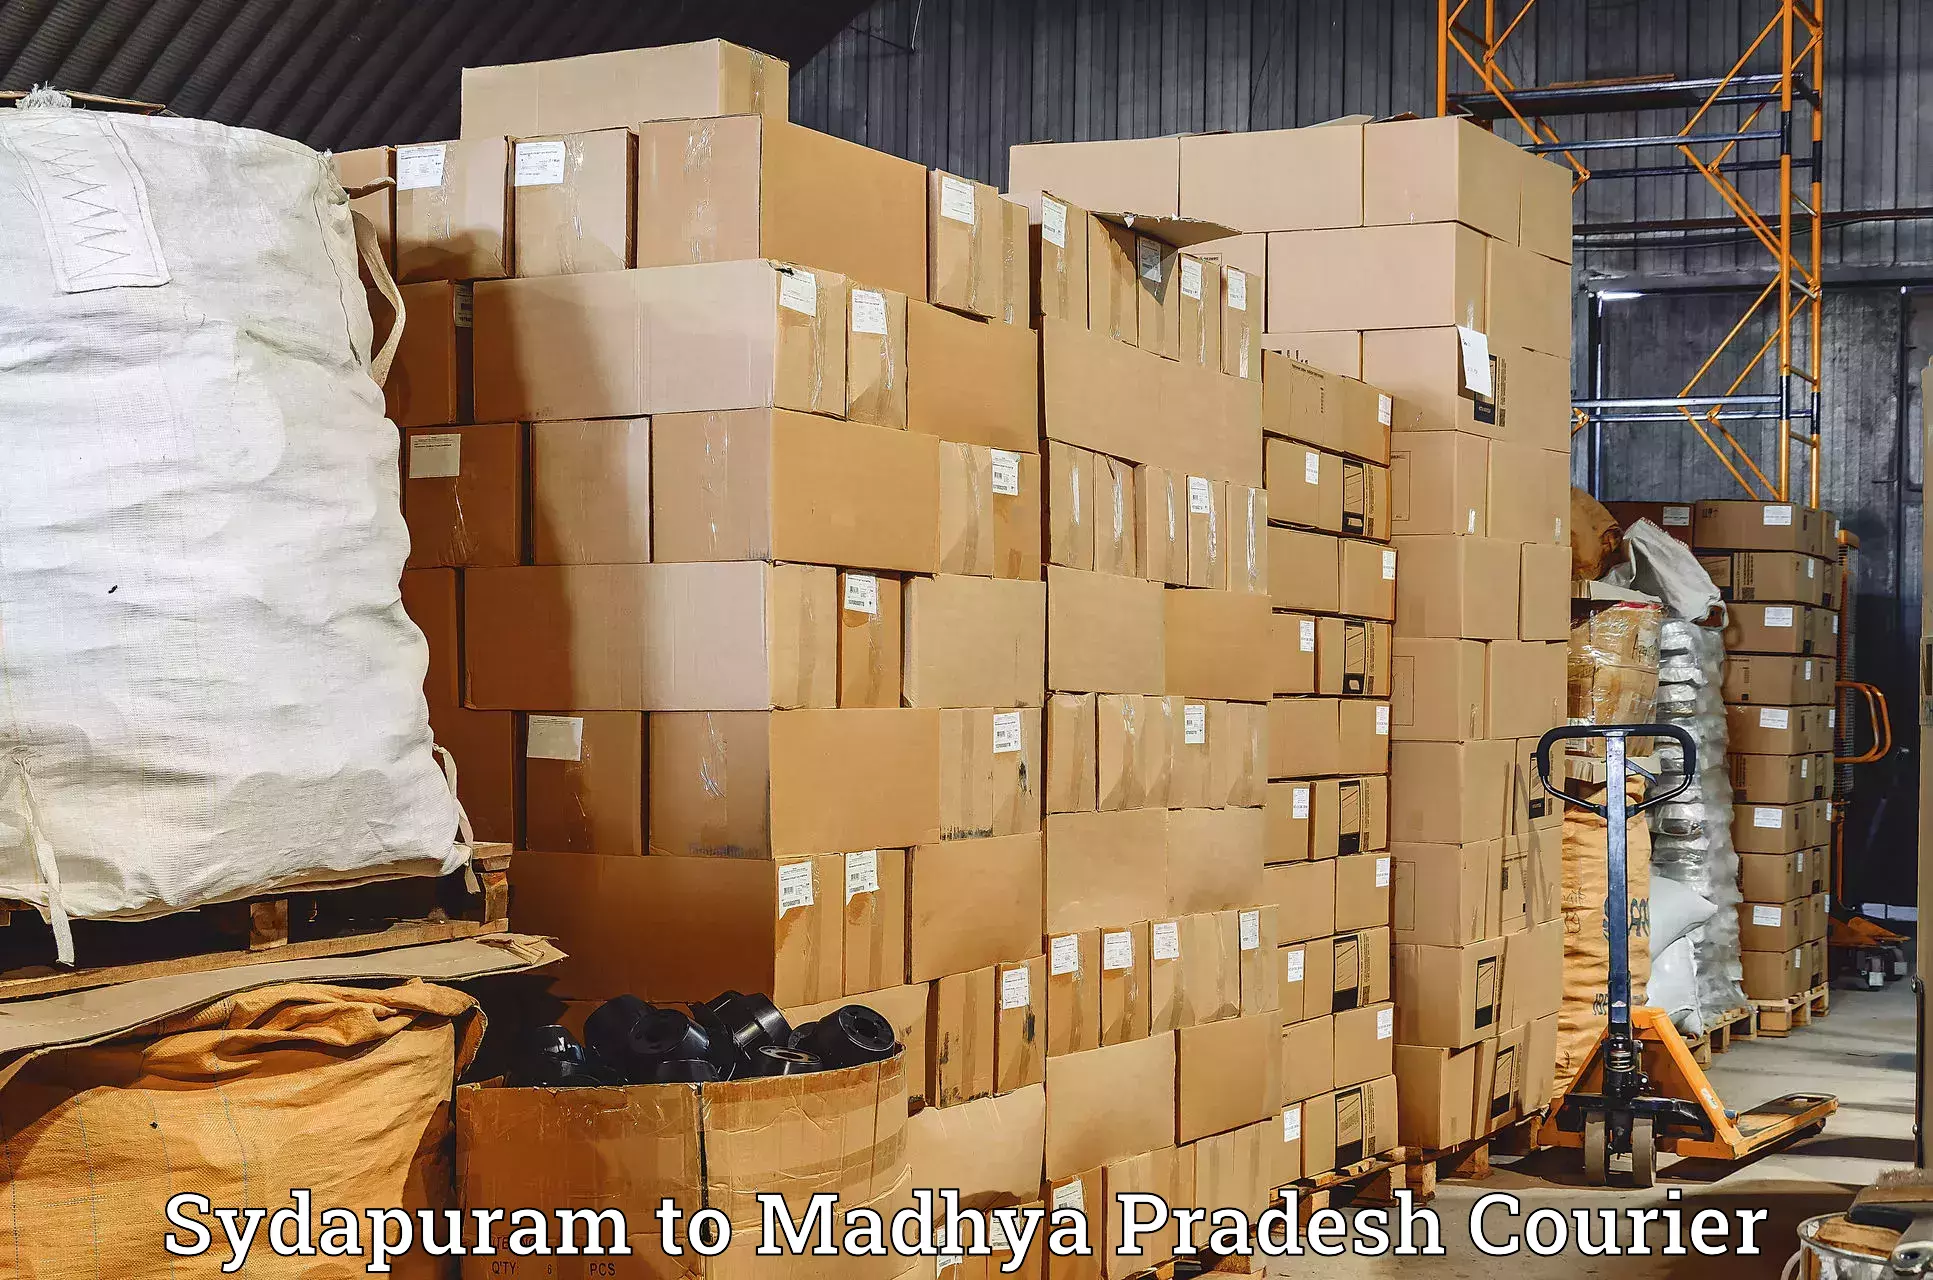 State-of-the-art courier technology Sydapuram to Maheshwar